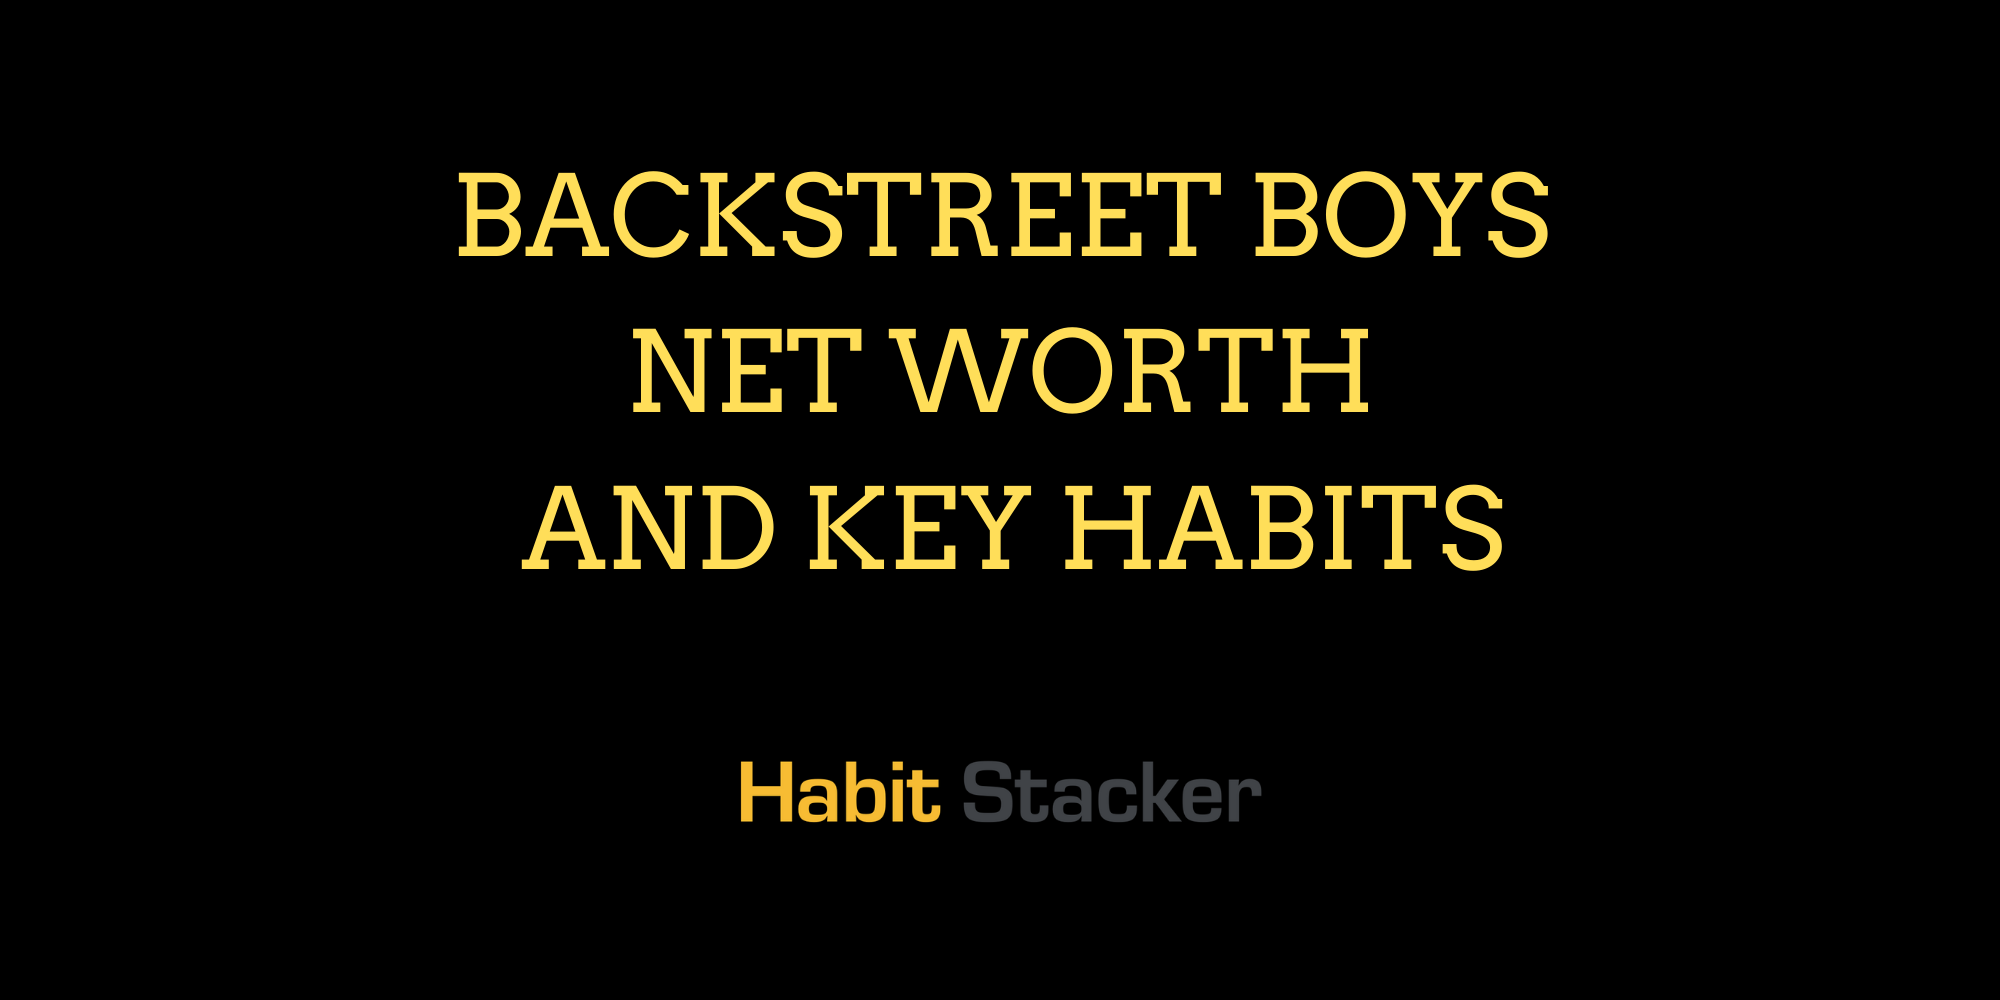 Backstreet Boys Net Worth and Key Habits